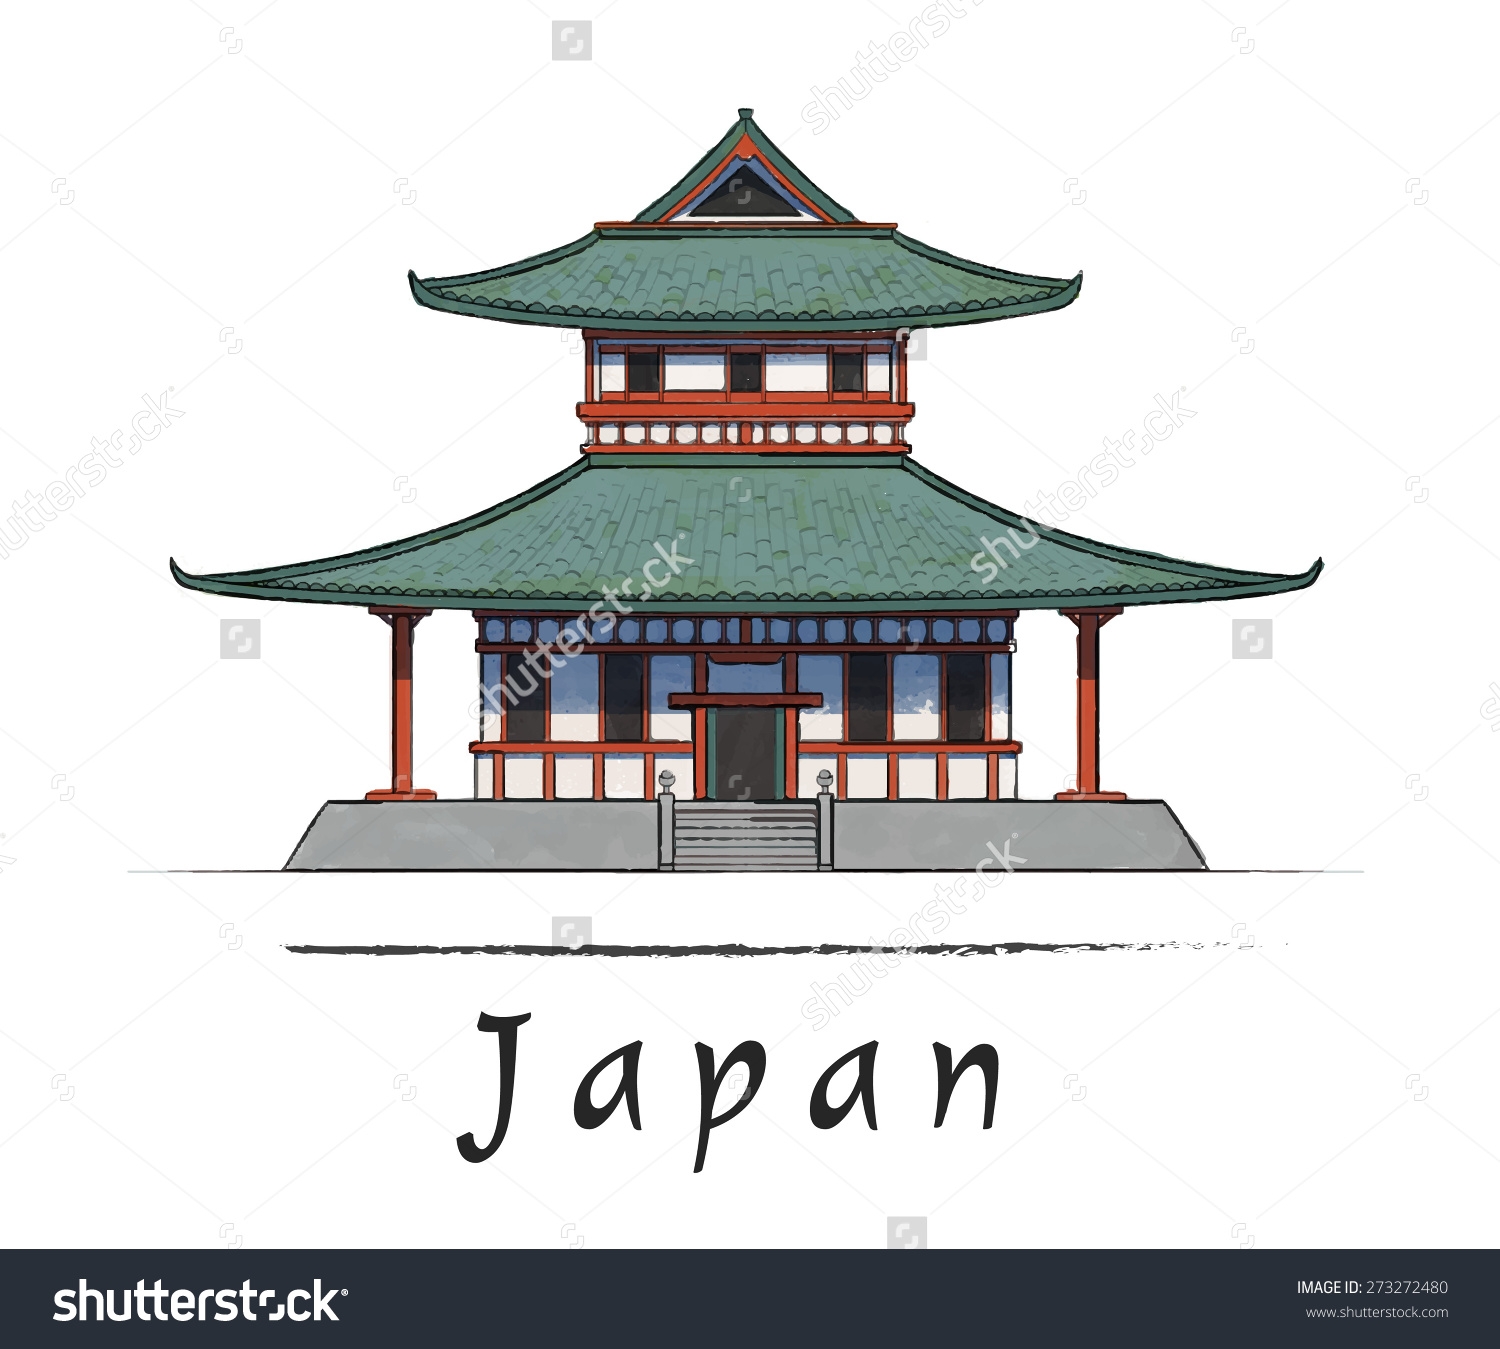 Japanese House Clipart.